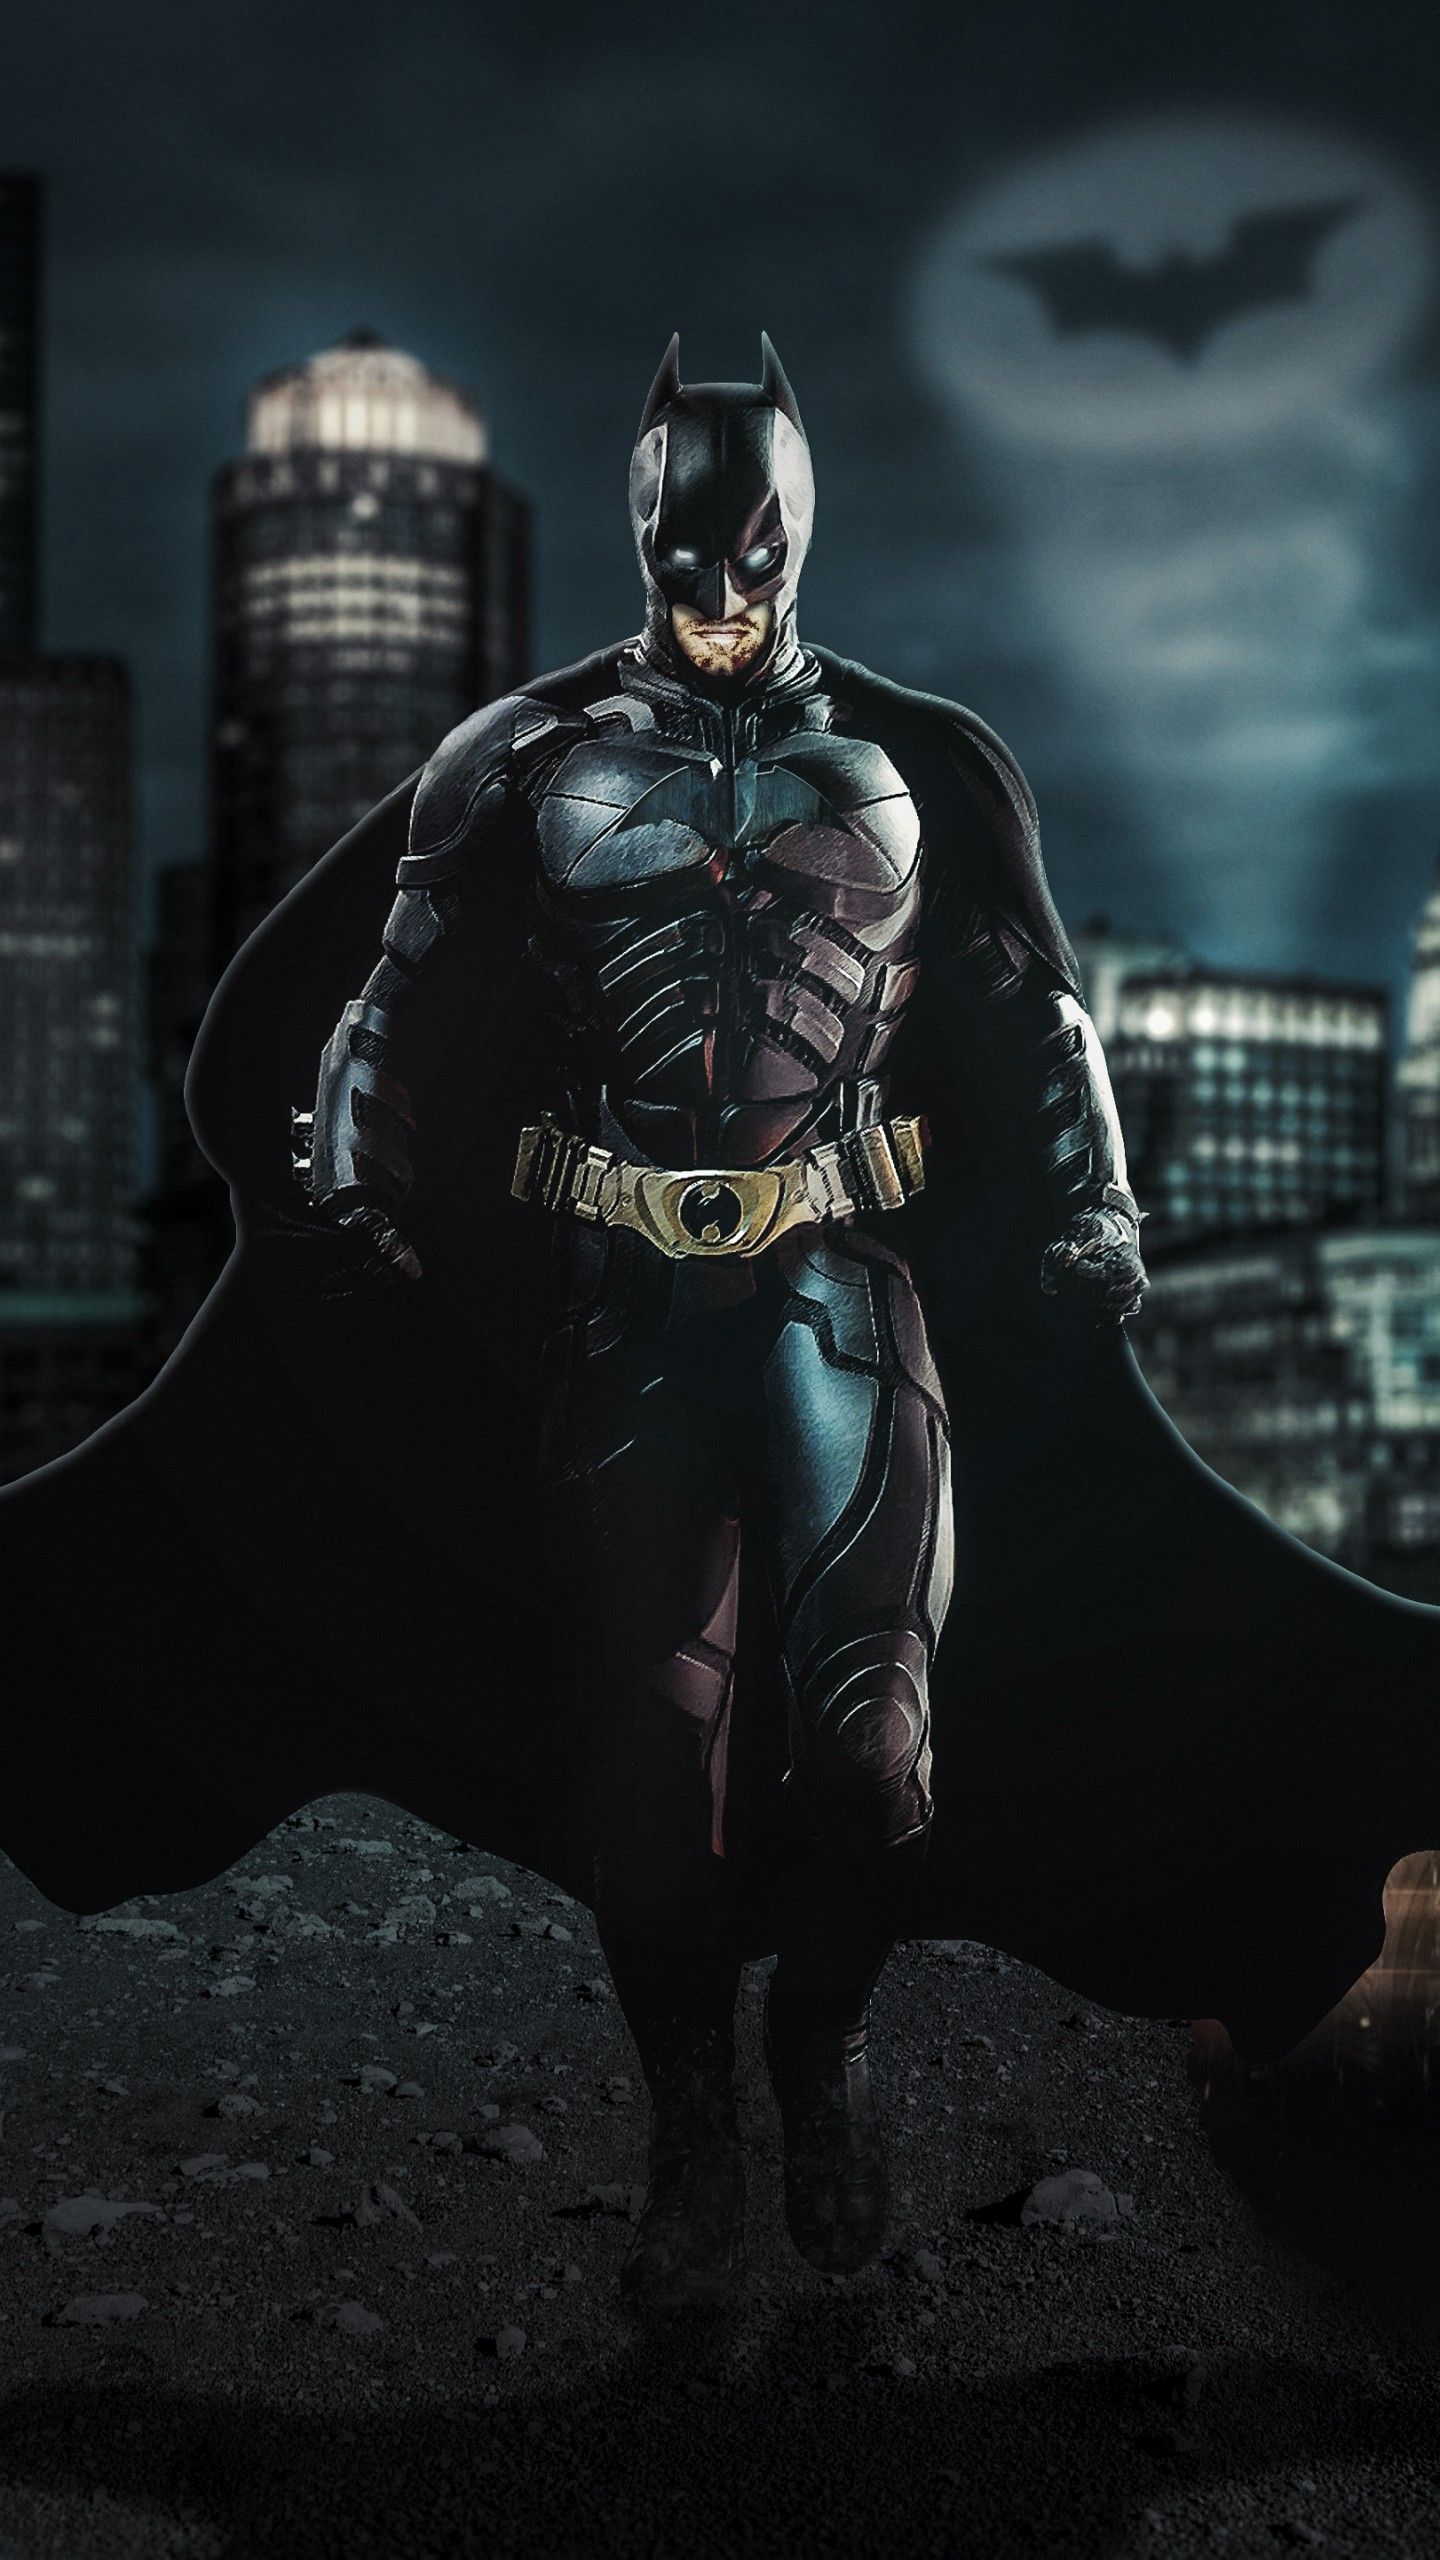 Wallpaper Batman, Dark Knight, 4K, Creative Graphics,. Wallpaper for iPhone, Android, Mobile and Desktop